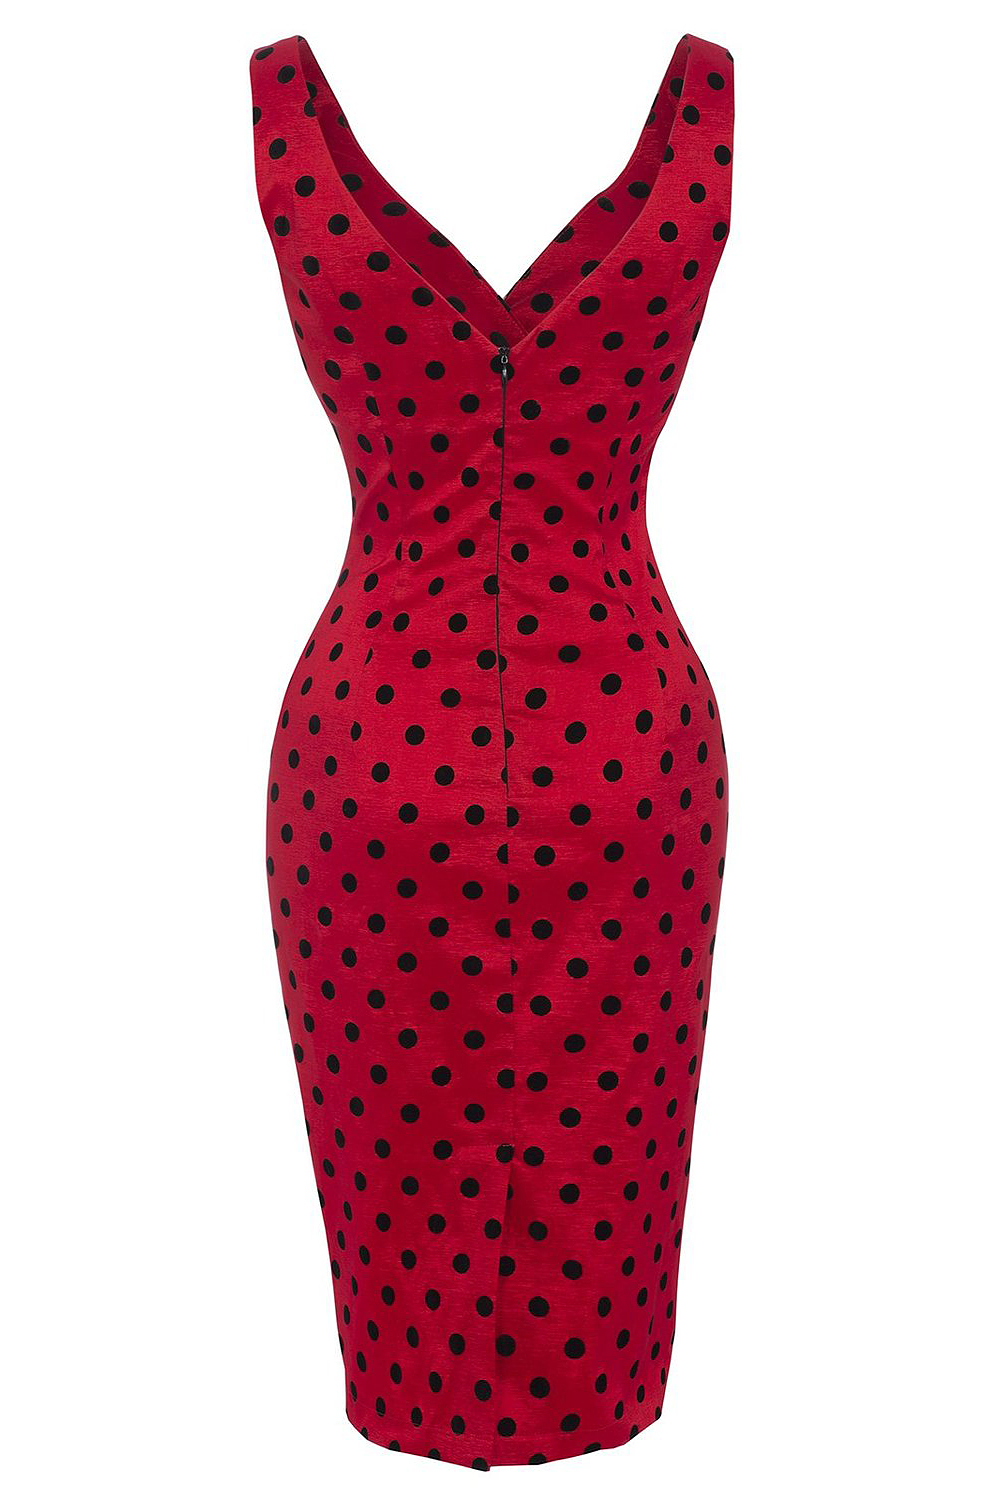 Voodoo Vixen Adrina Dress | Red Black Polka Dot Dress | 1950s Fabulous ...